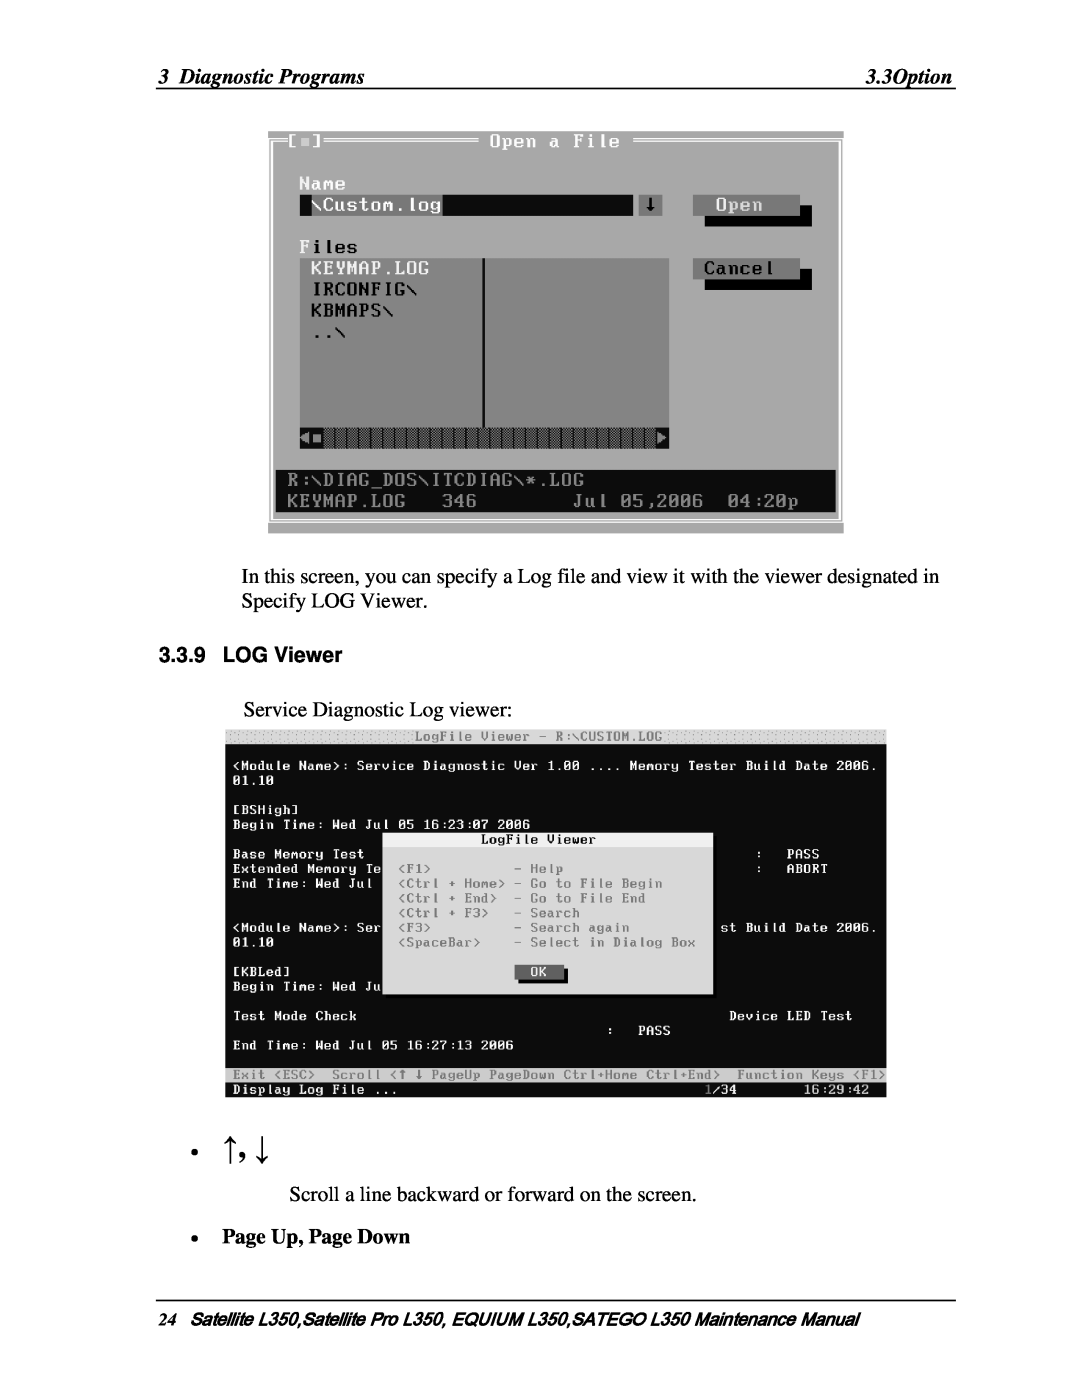 Toshiba PSLD3X, PSLD1X, PSLD2X manual ↑, ↓, LOG Viewer, Page Up, Page Down 